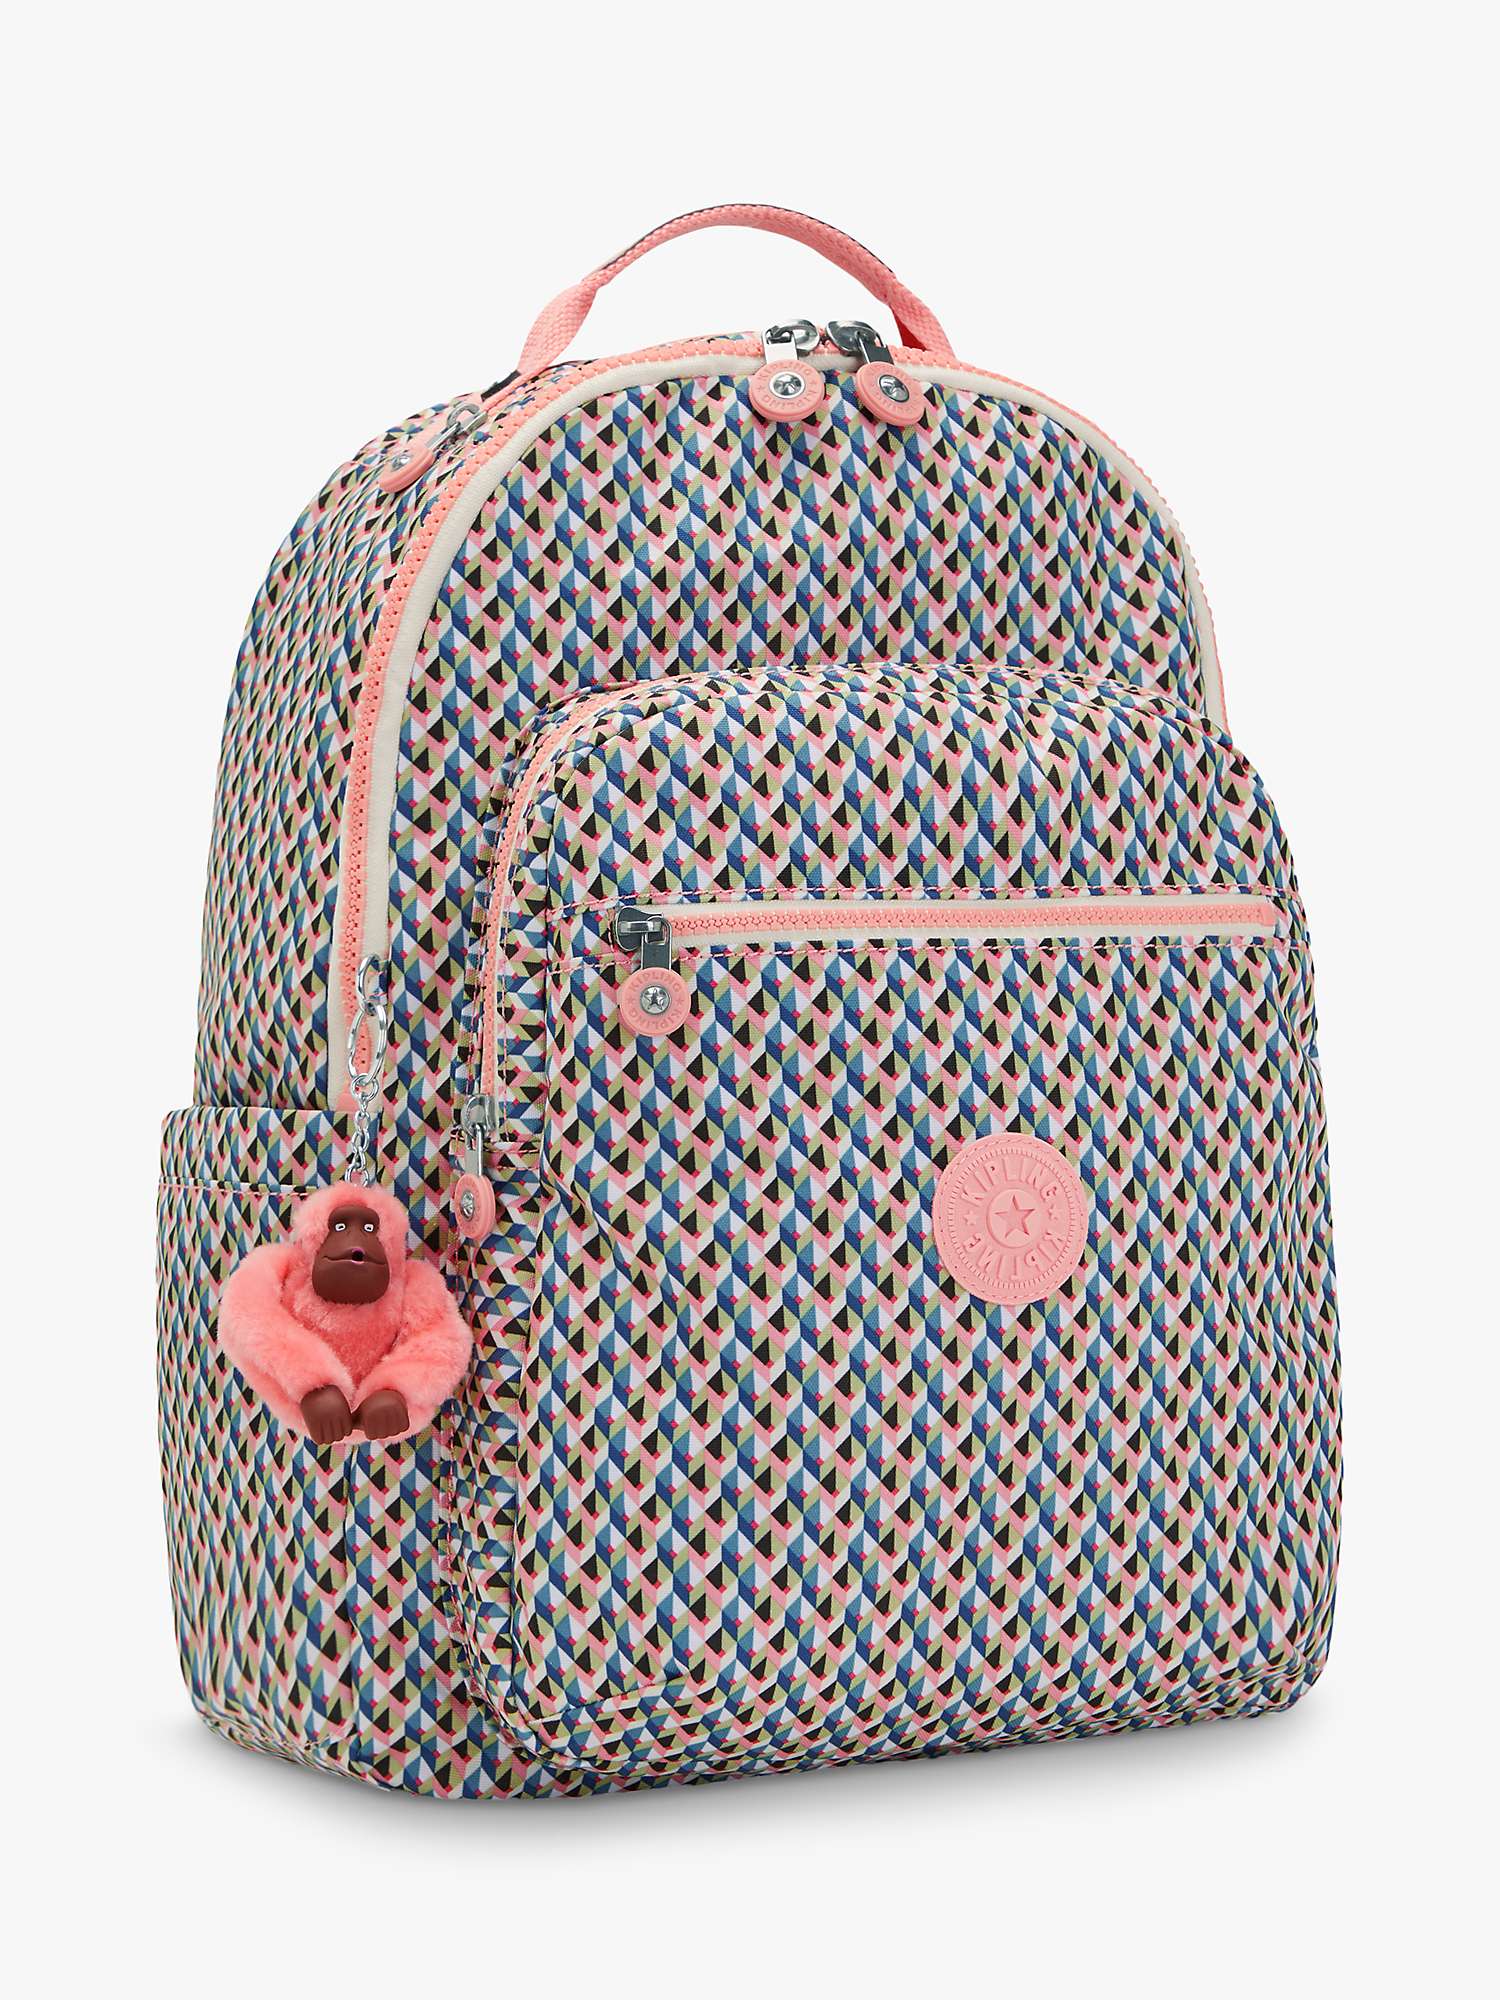 Buy Kipling Seoul Large Backpack, Girly Geo Online at johnlewis.com